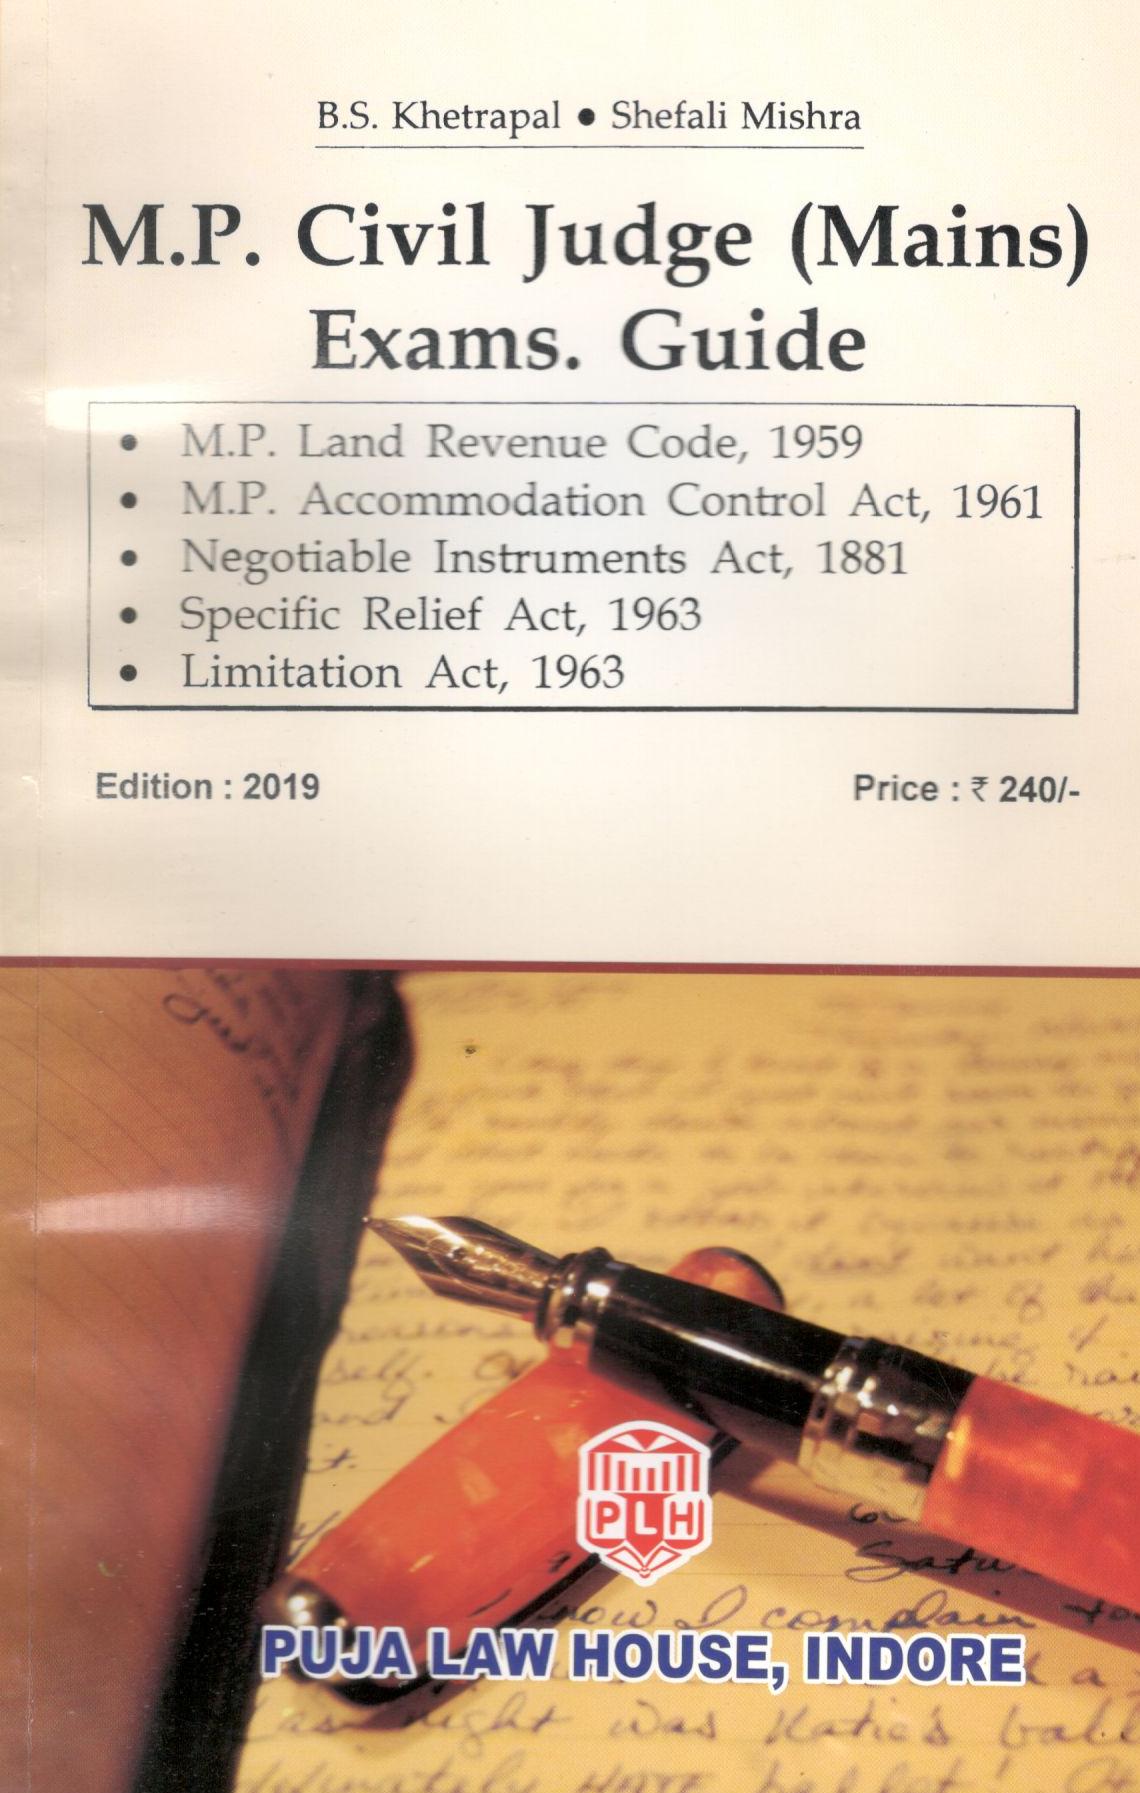 M.P. Civil Judge (Mains) Exams. Guide